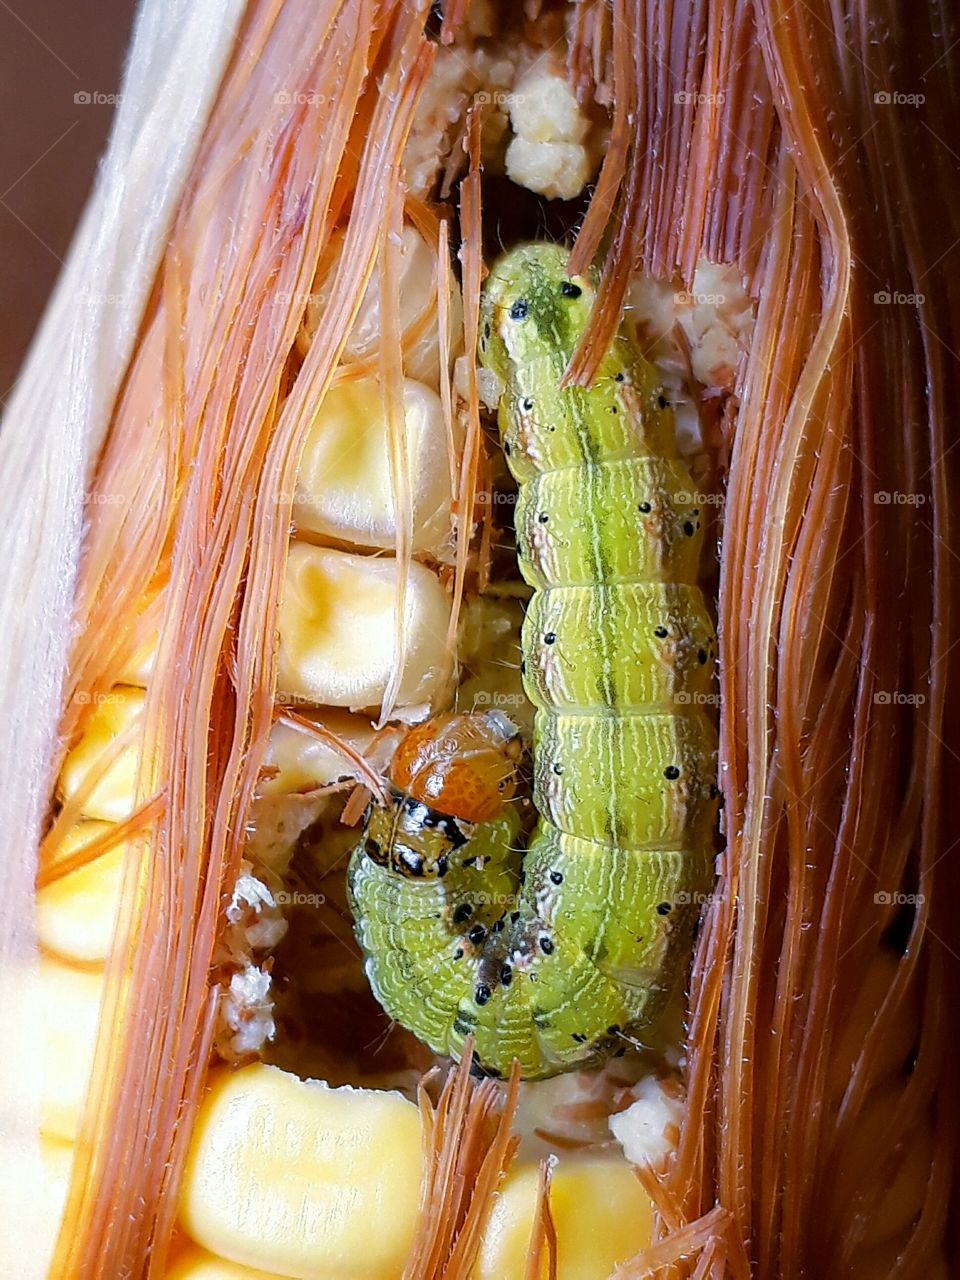 Ciclo. Larva de inseto. Lagarta. Cycle. Insect larva. Caterpillar.